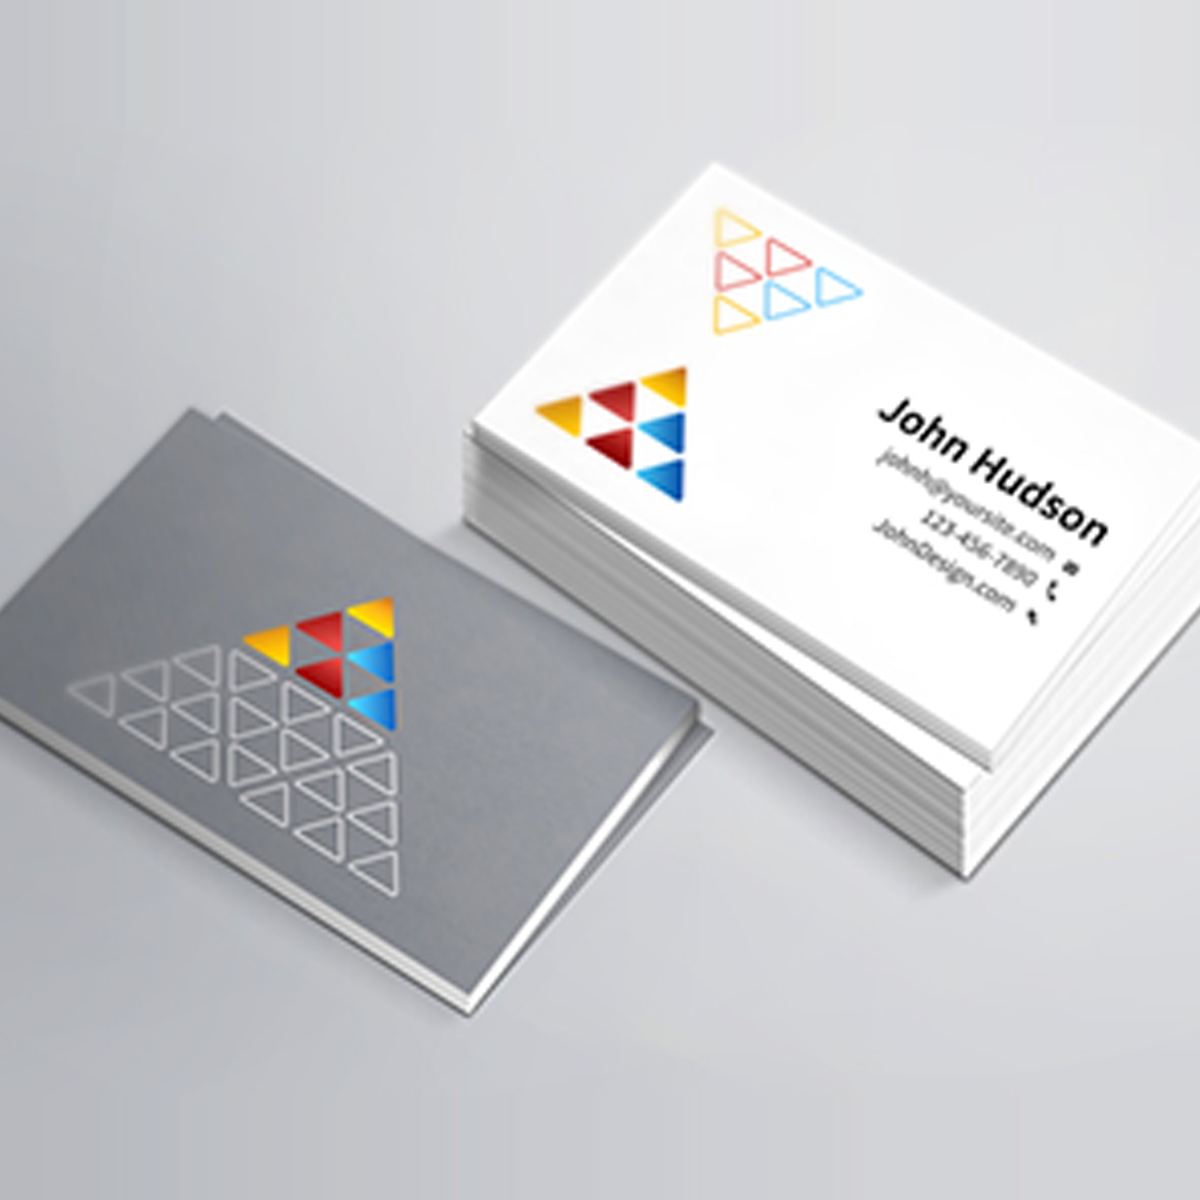 Business Card Design.